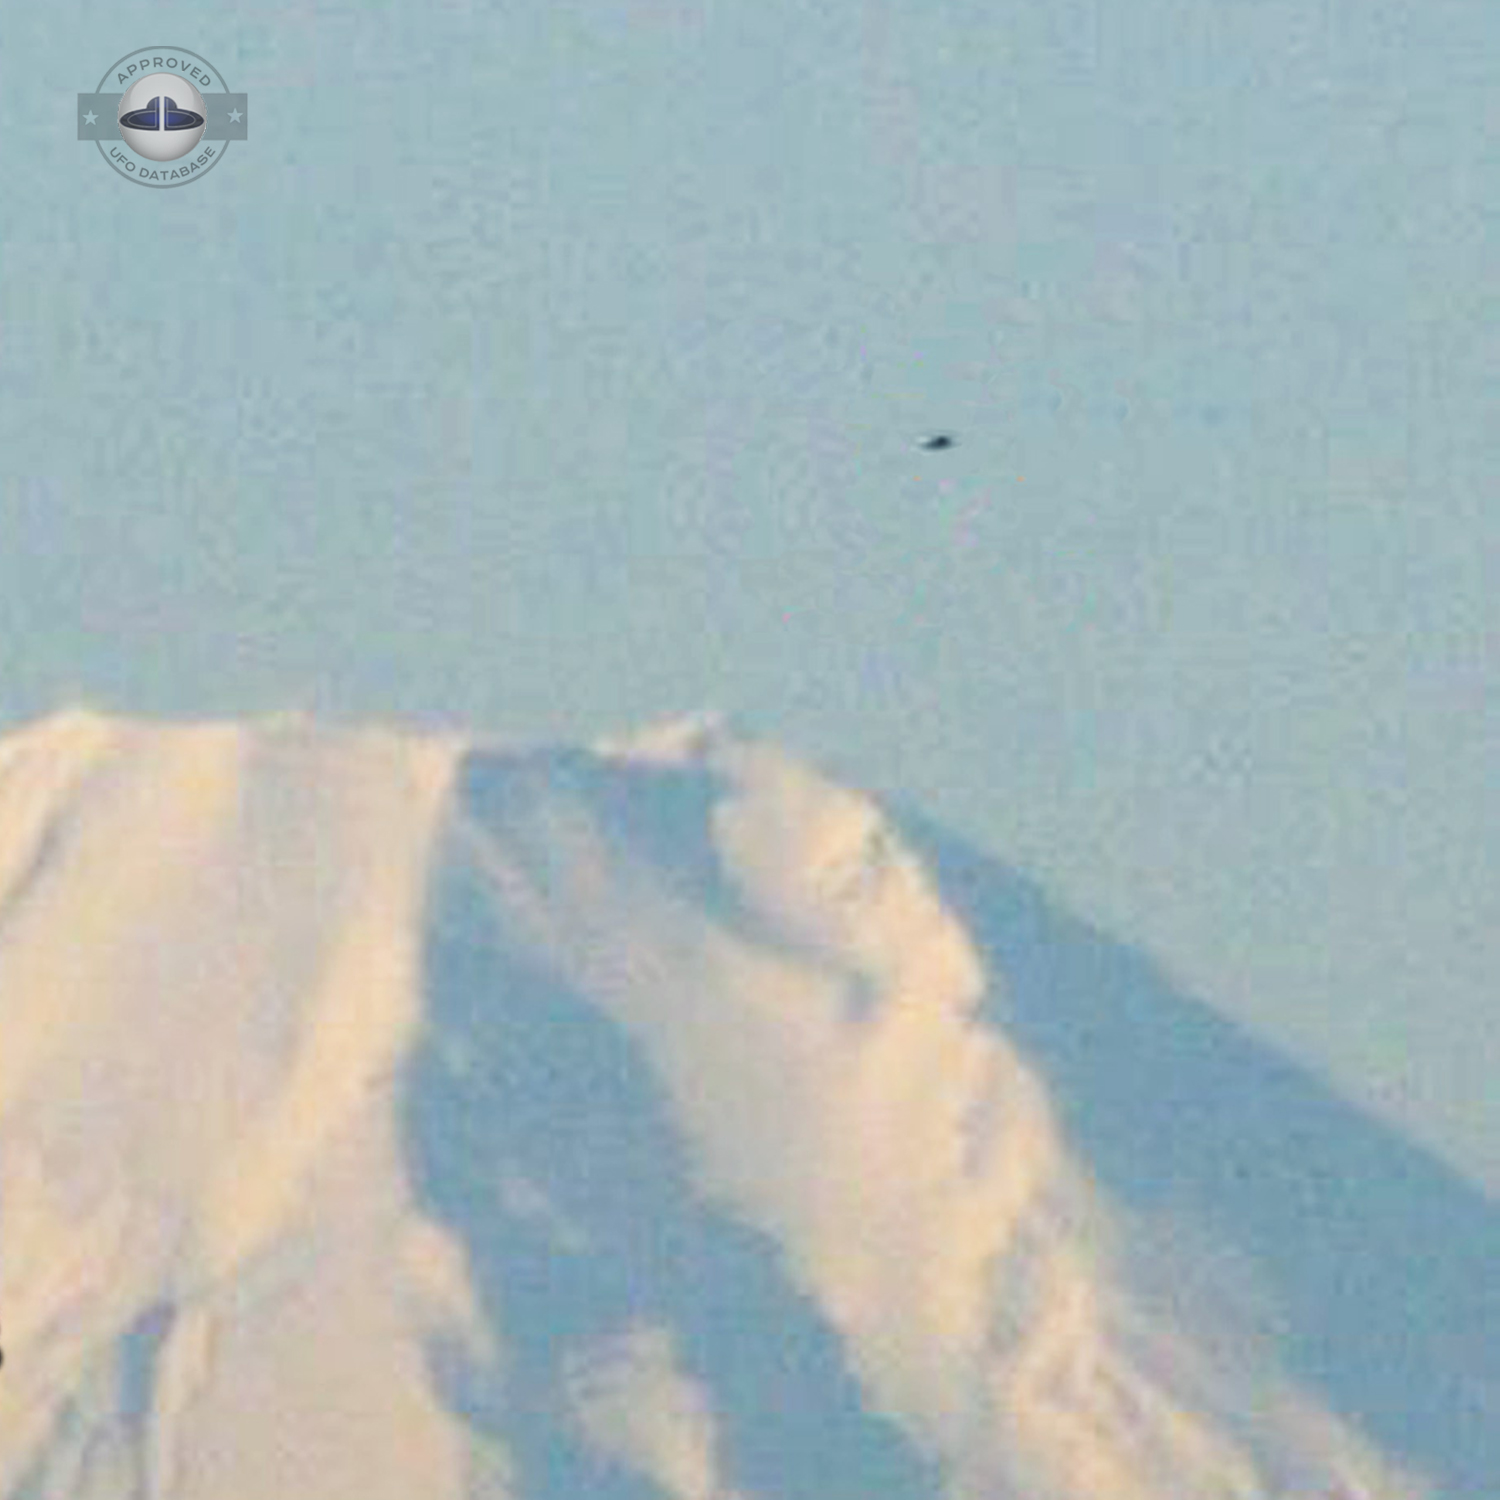 Fleet of UFOs over Mount Fuji worries Asia | Japan | February 2011 UFO Picture #220-2